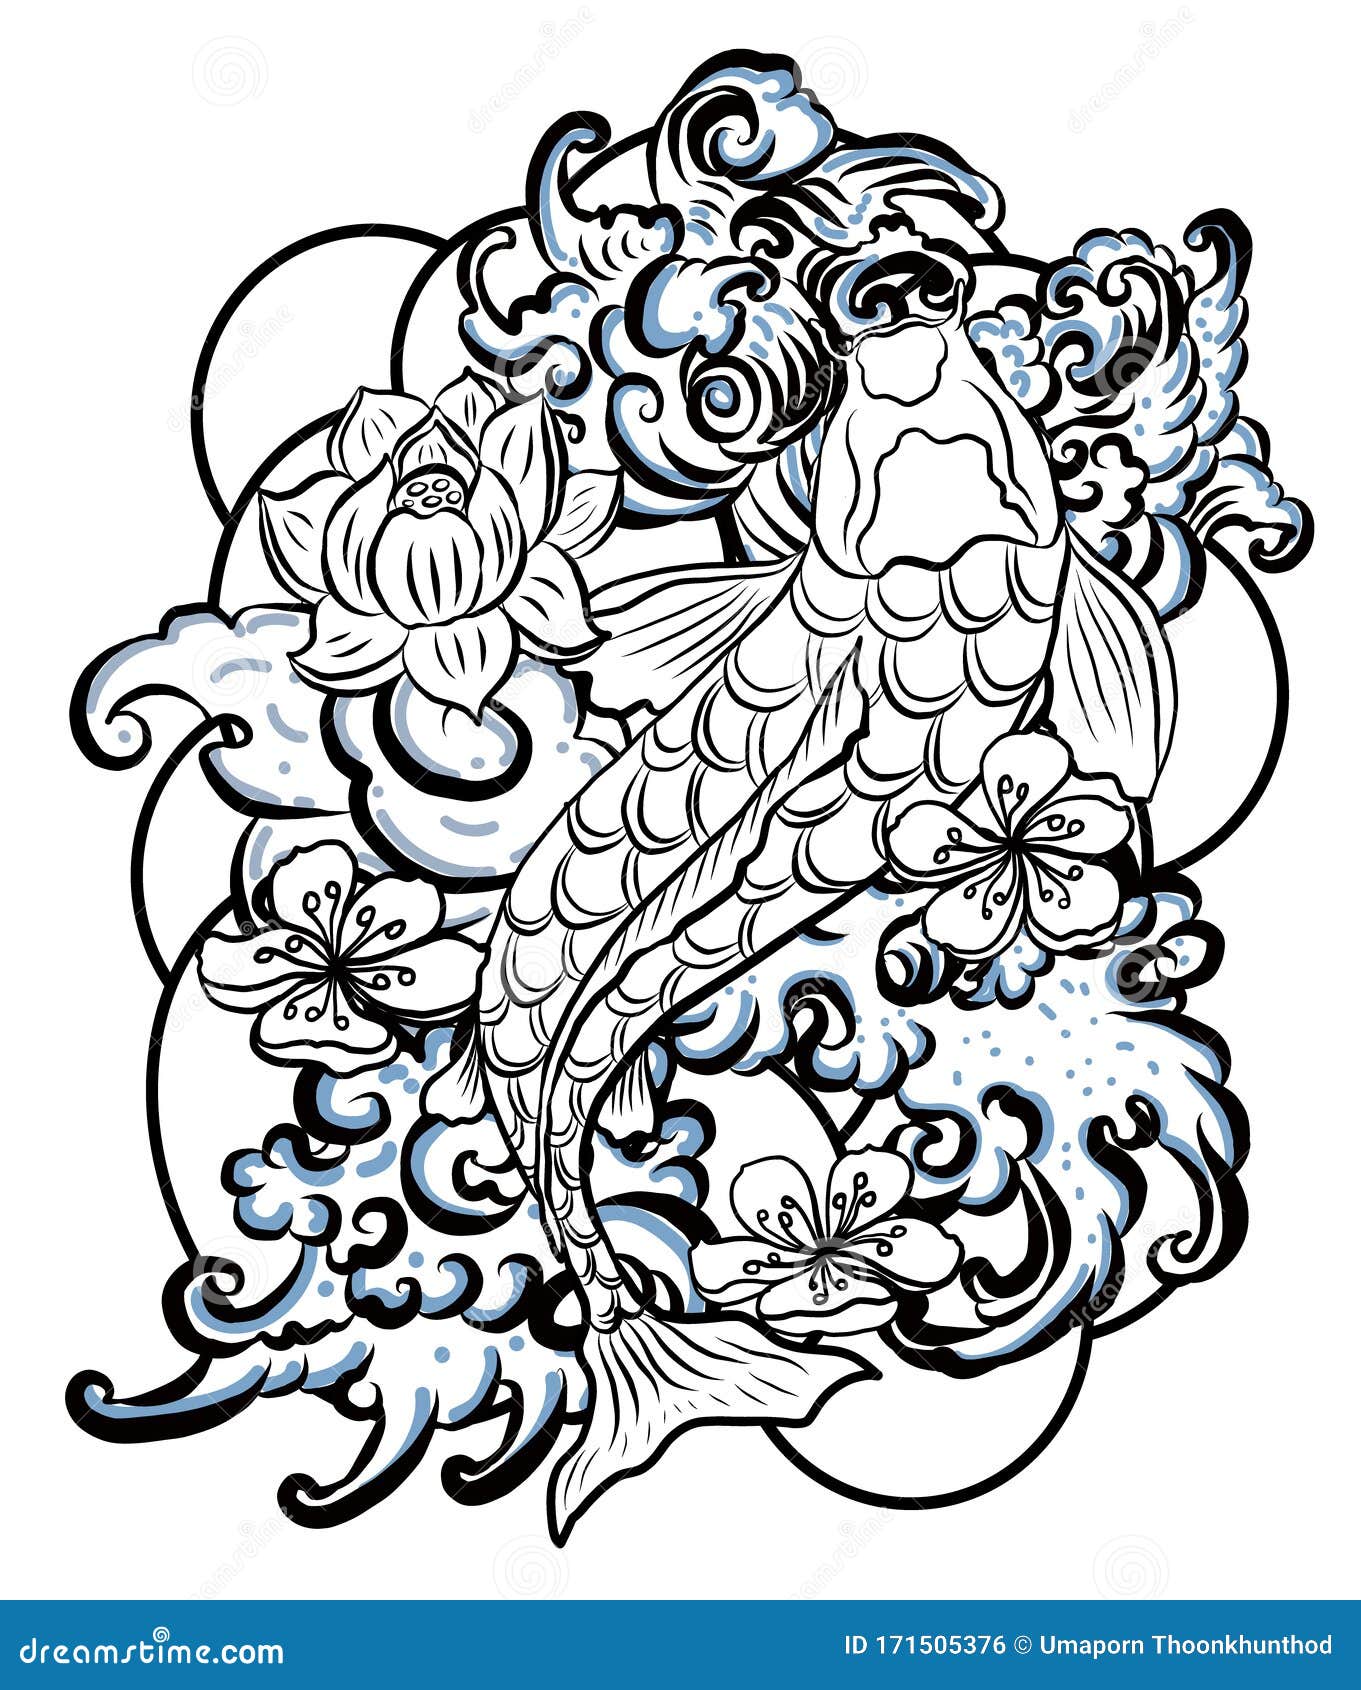 80 Koi Fish Tattoo Designs To Try in 2023  Tattoos Design Idea